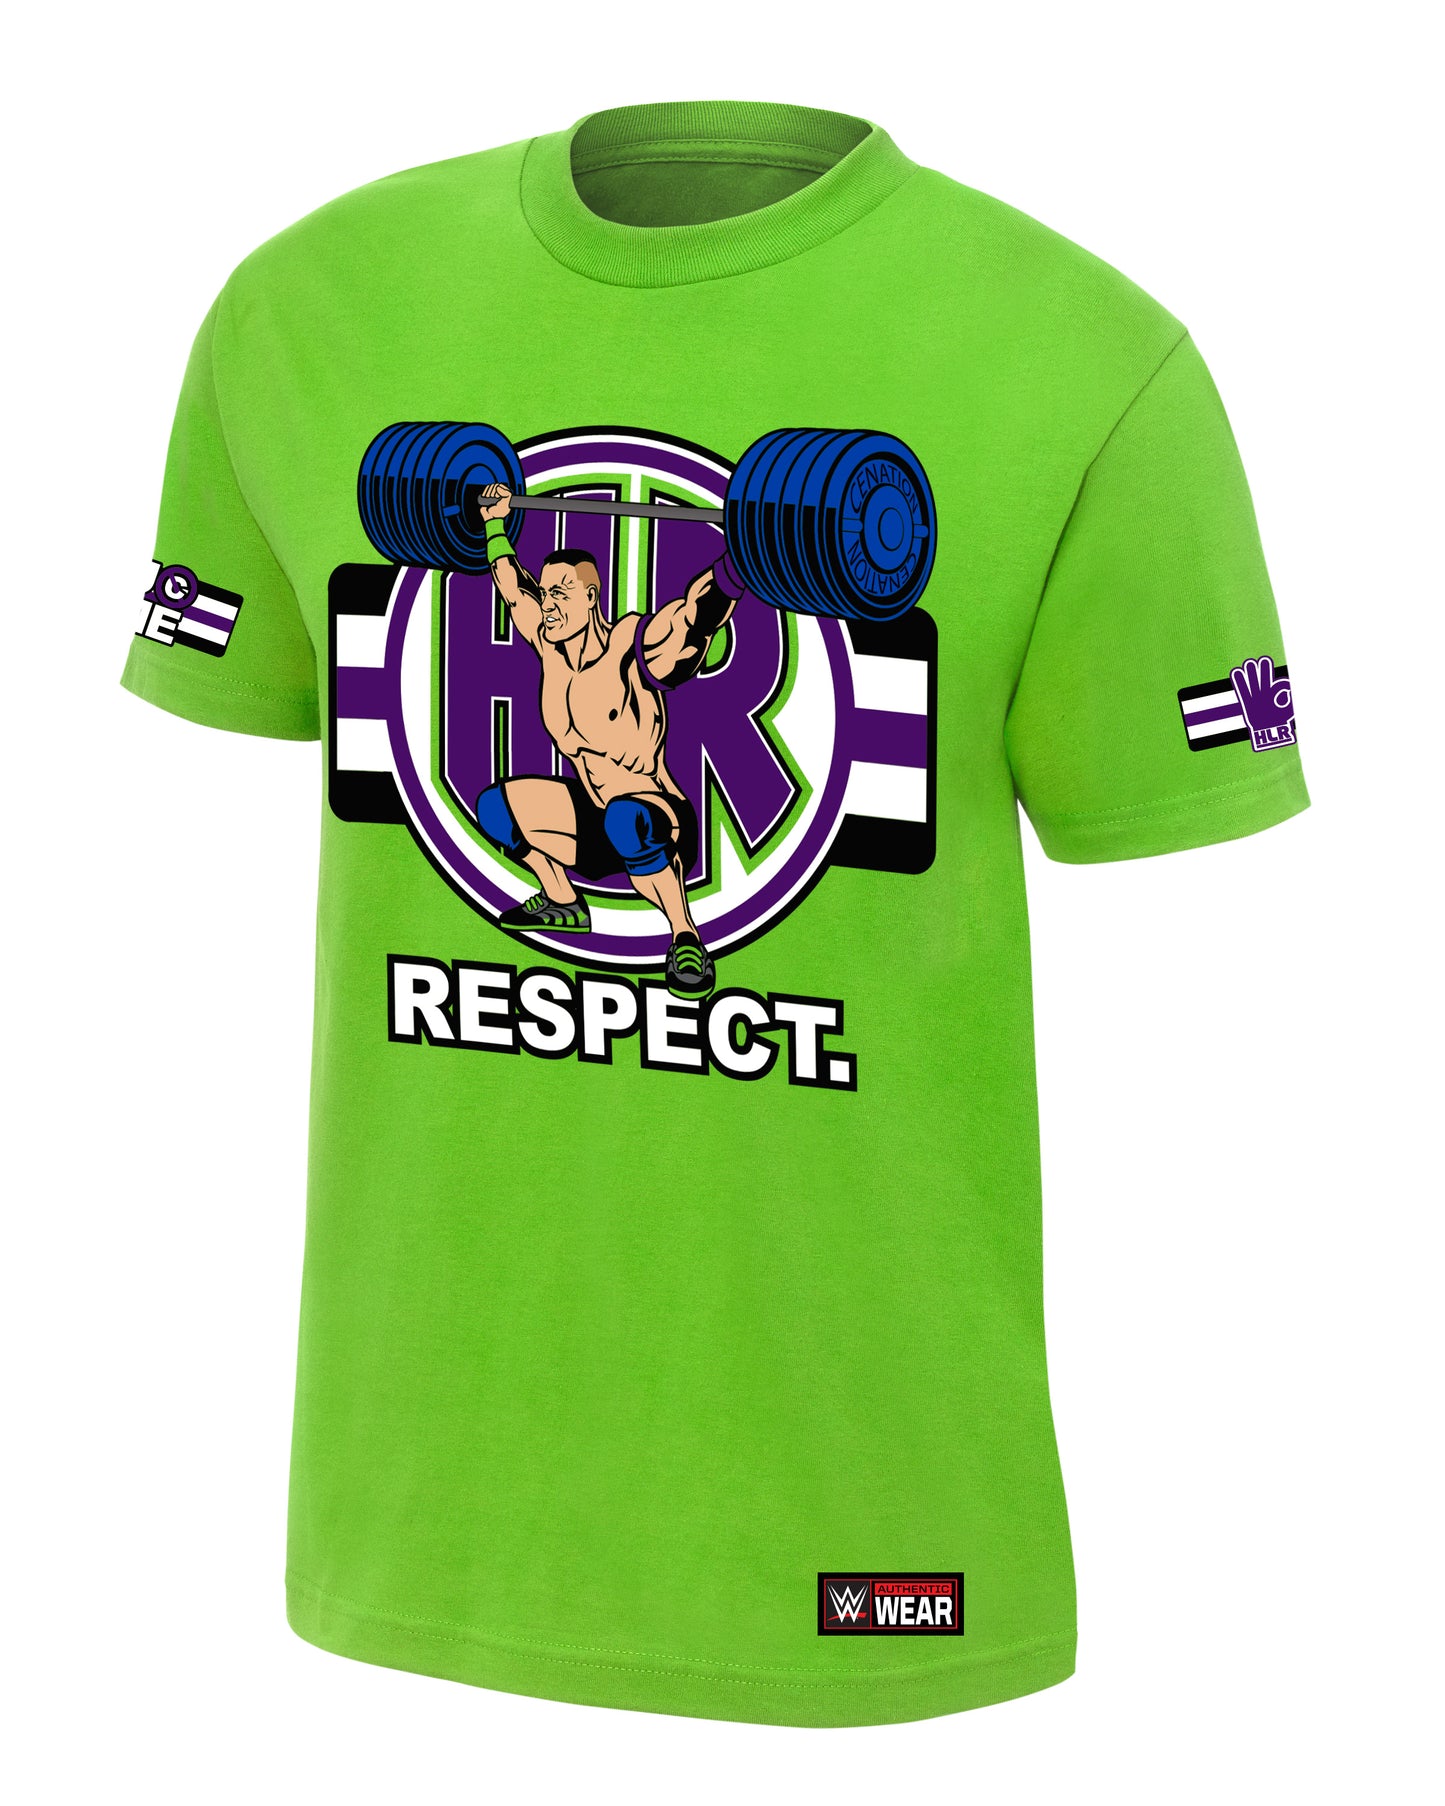 John Cena Cenation Respect Authentic T-Shirt